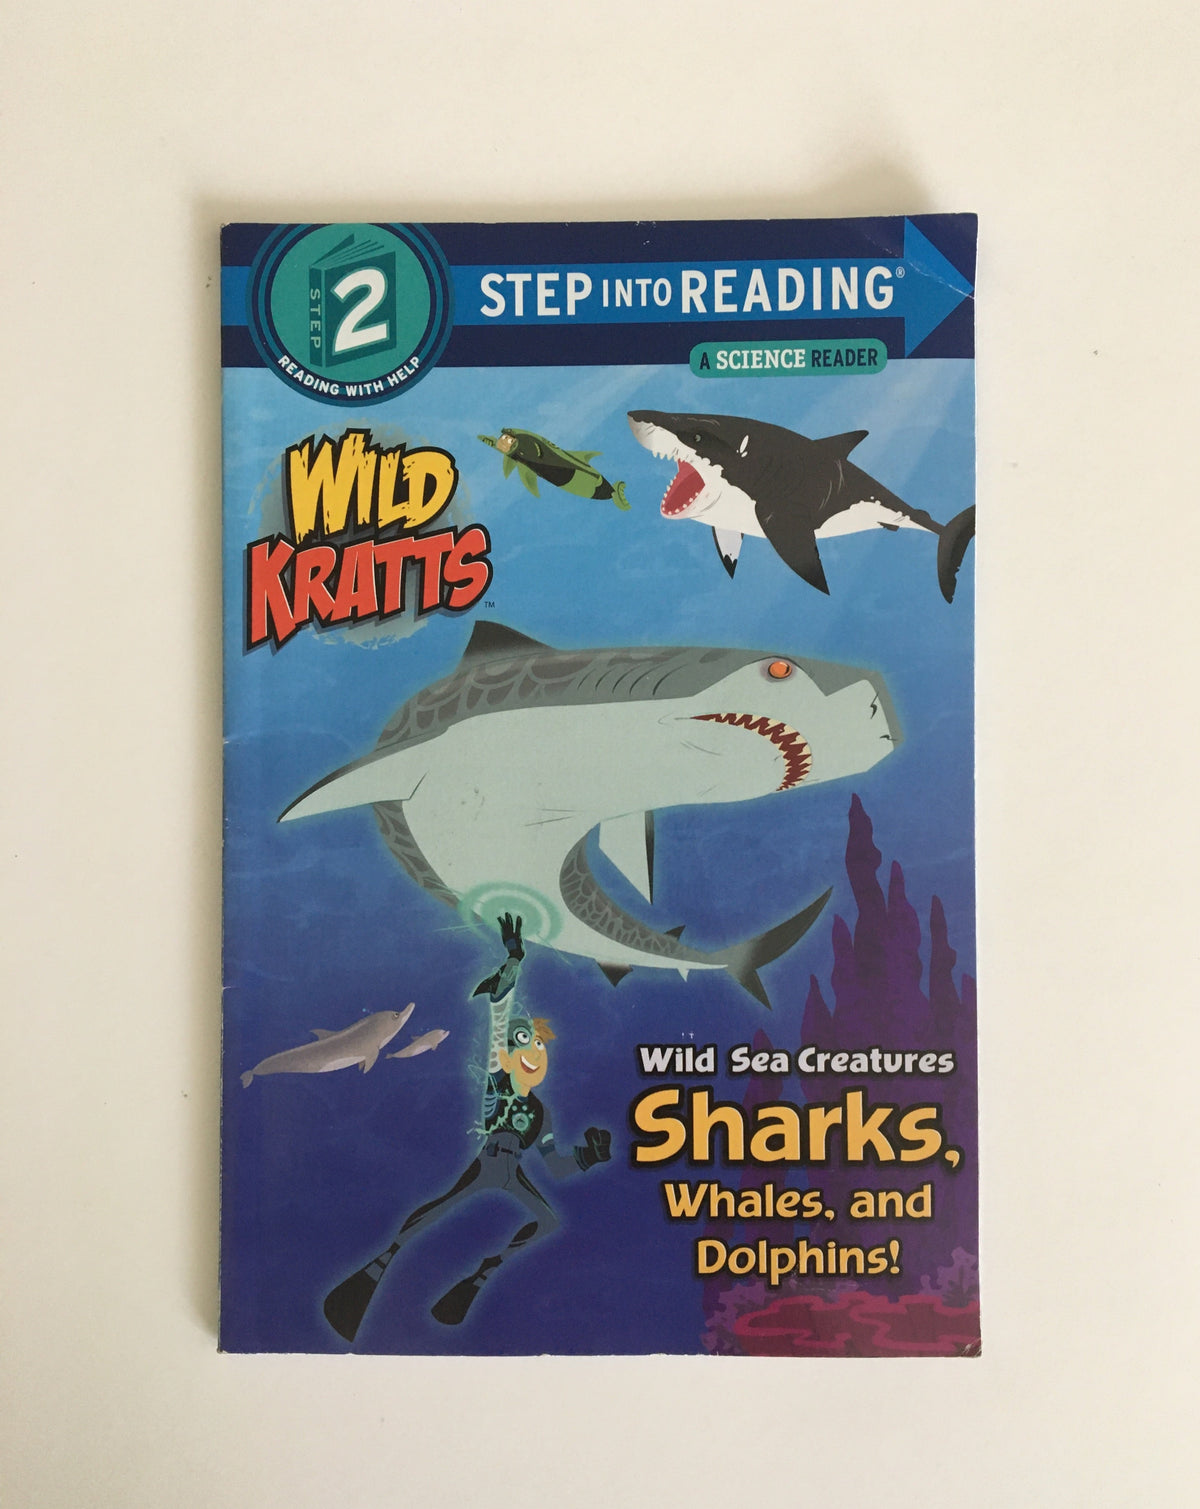 Wild Kratts: Wild Sea Creatures by the Kratt Brothers